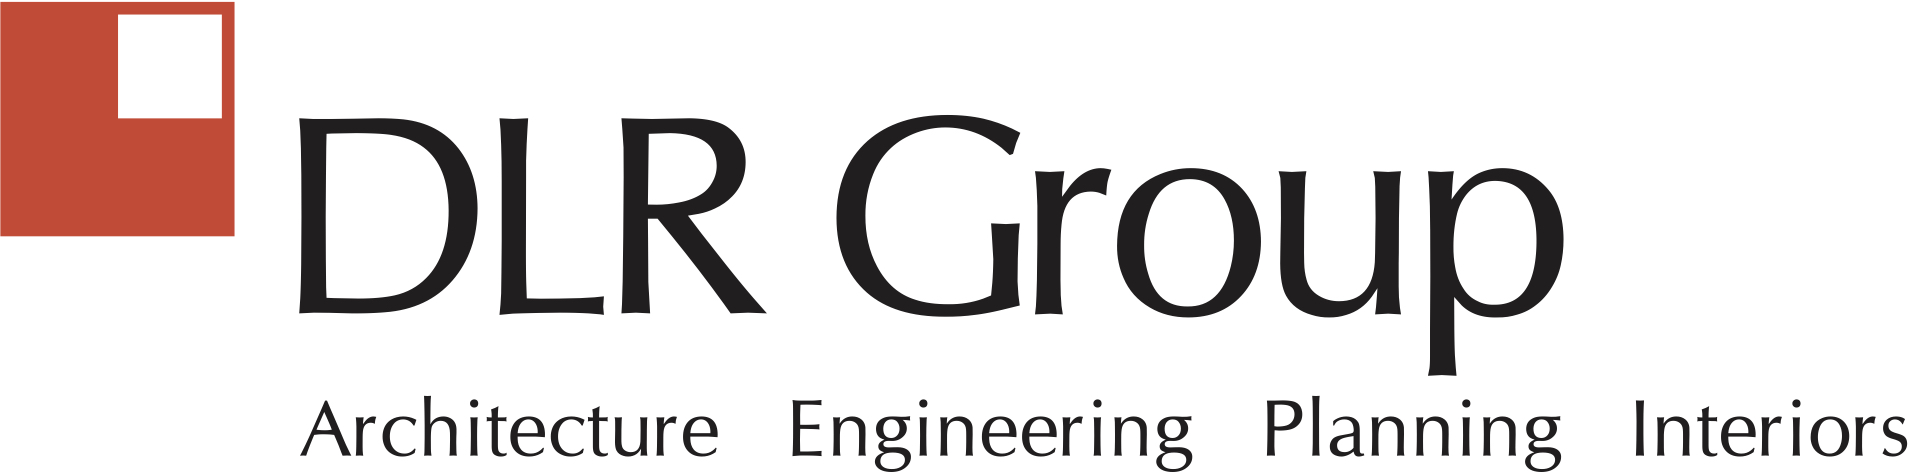 DLR Group Logo+svs-horiz_large_CMYK.jpg